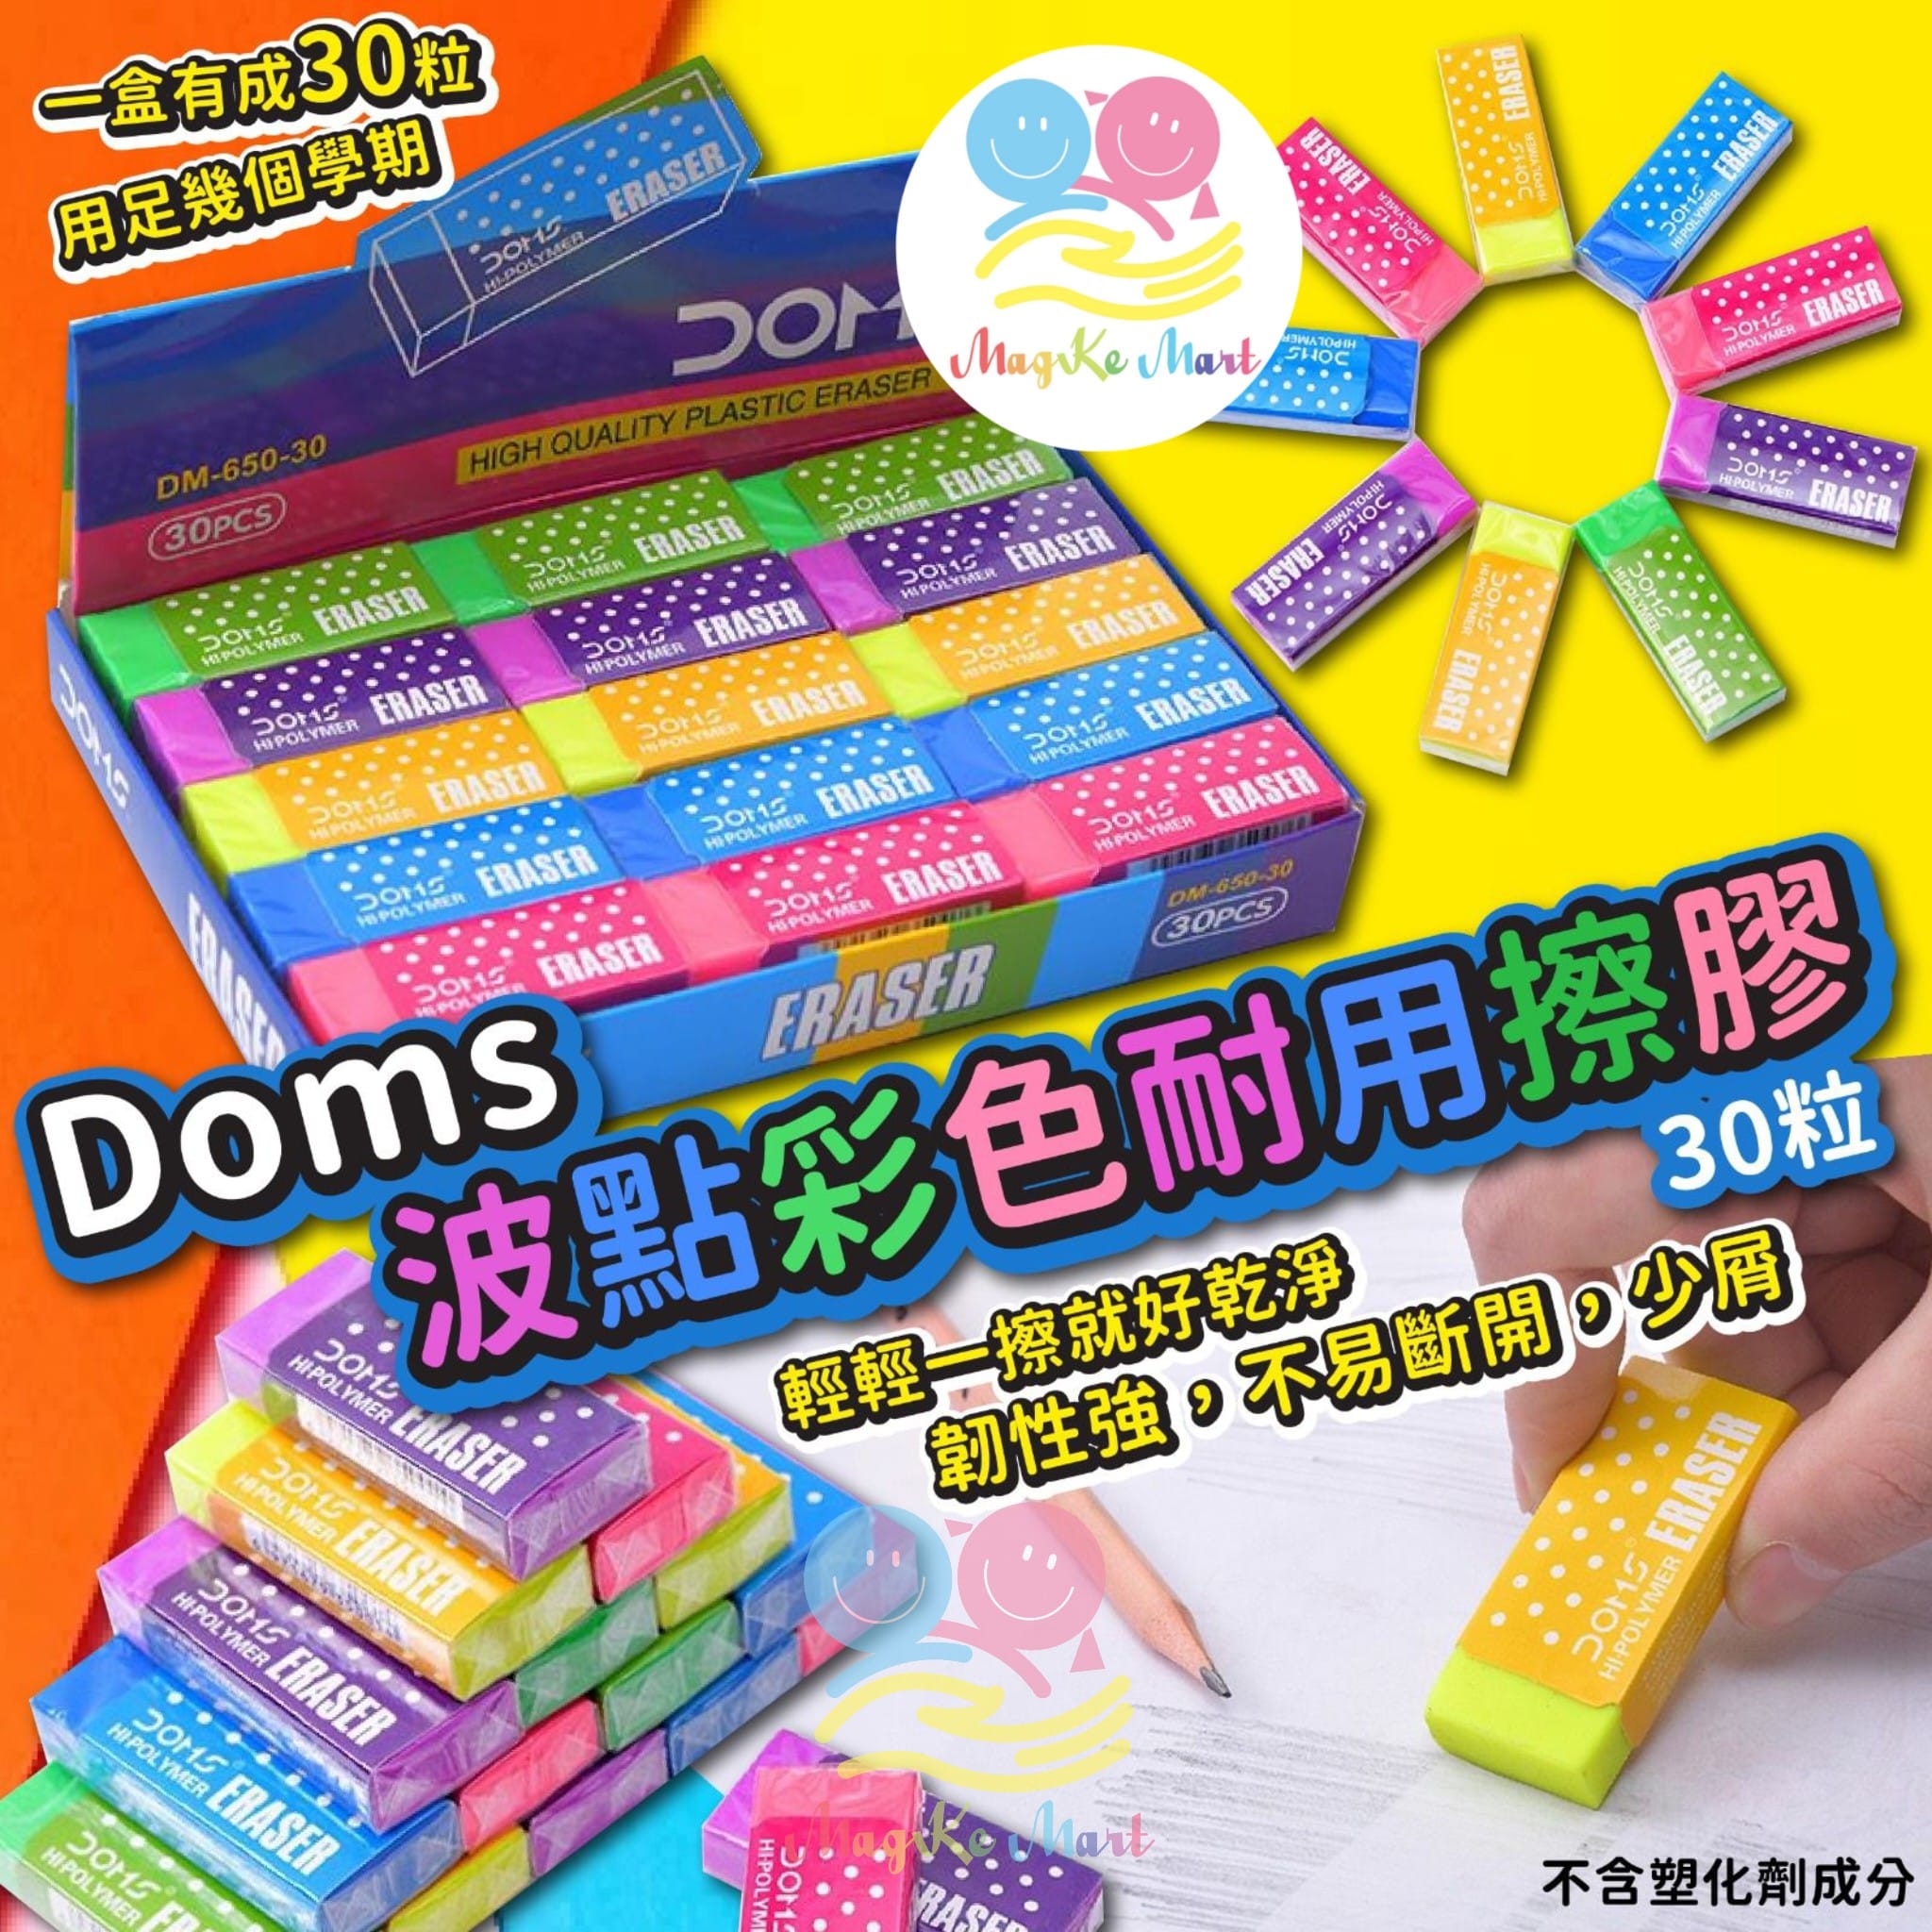 Doms 波點彩色耐用擦膠(1盒30粒)